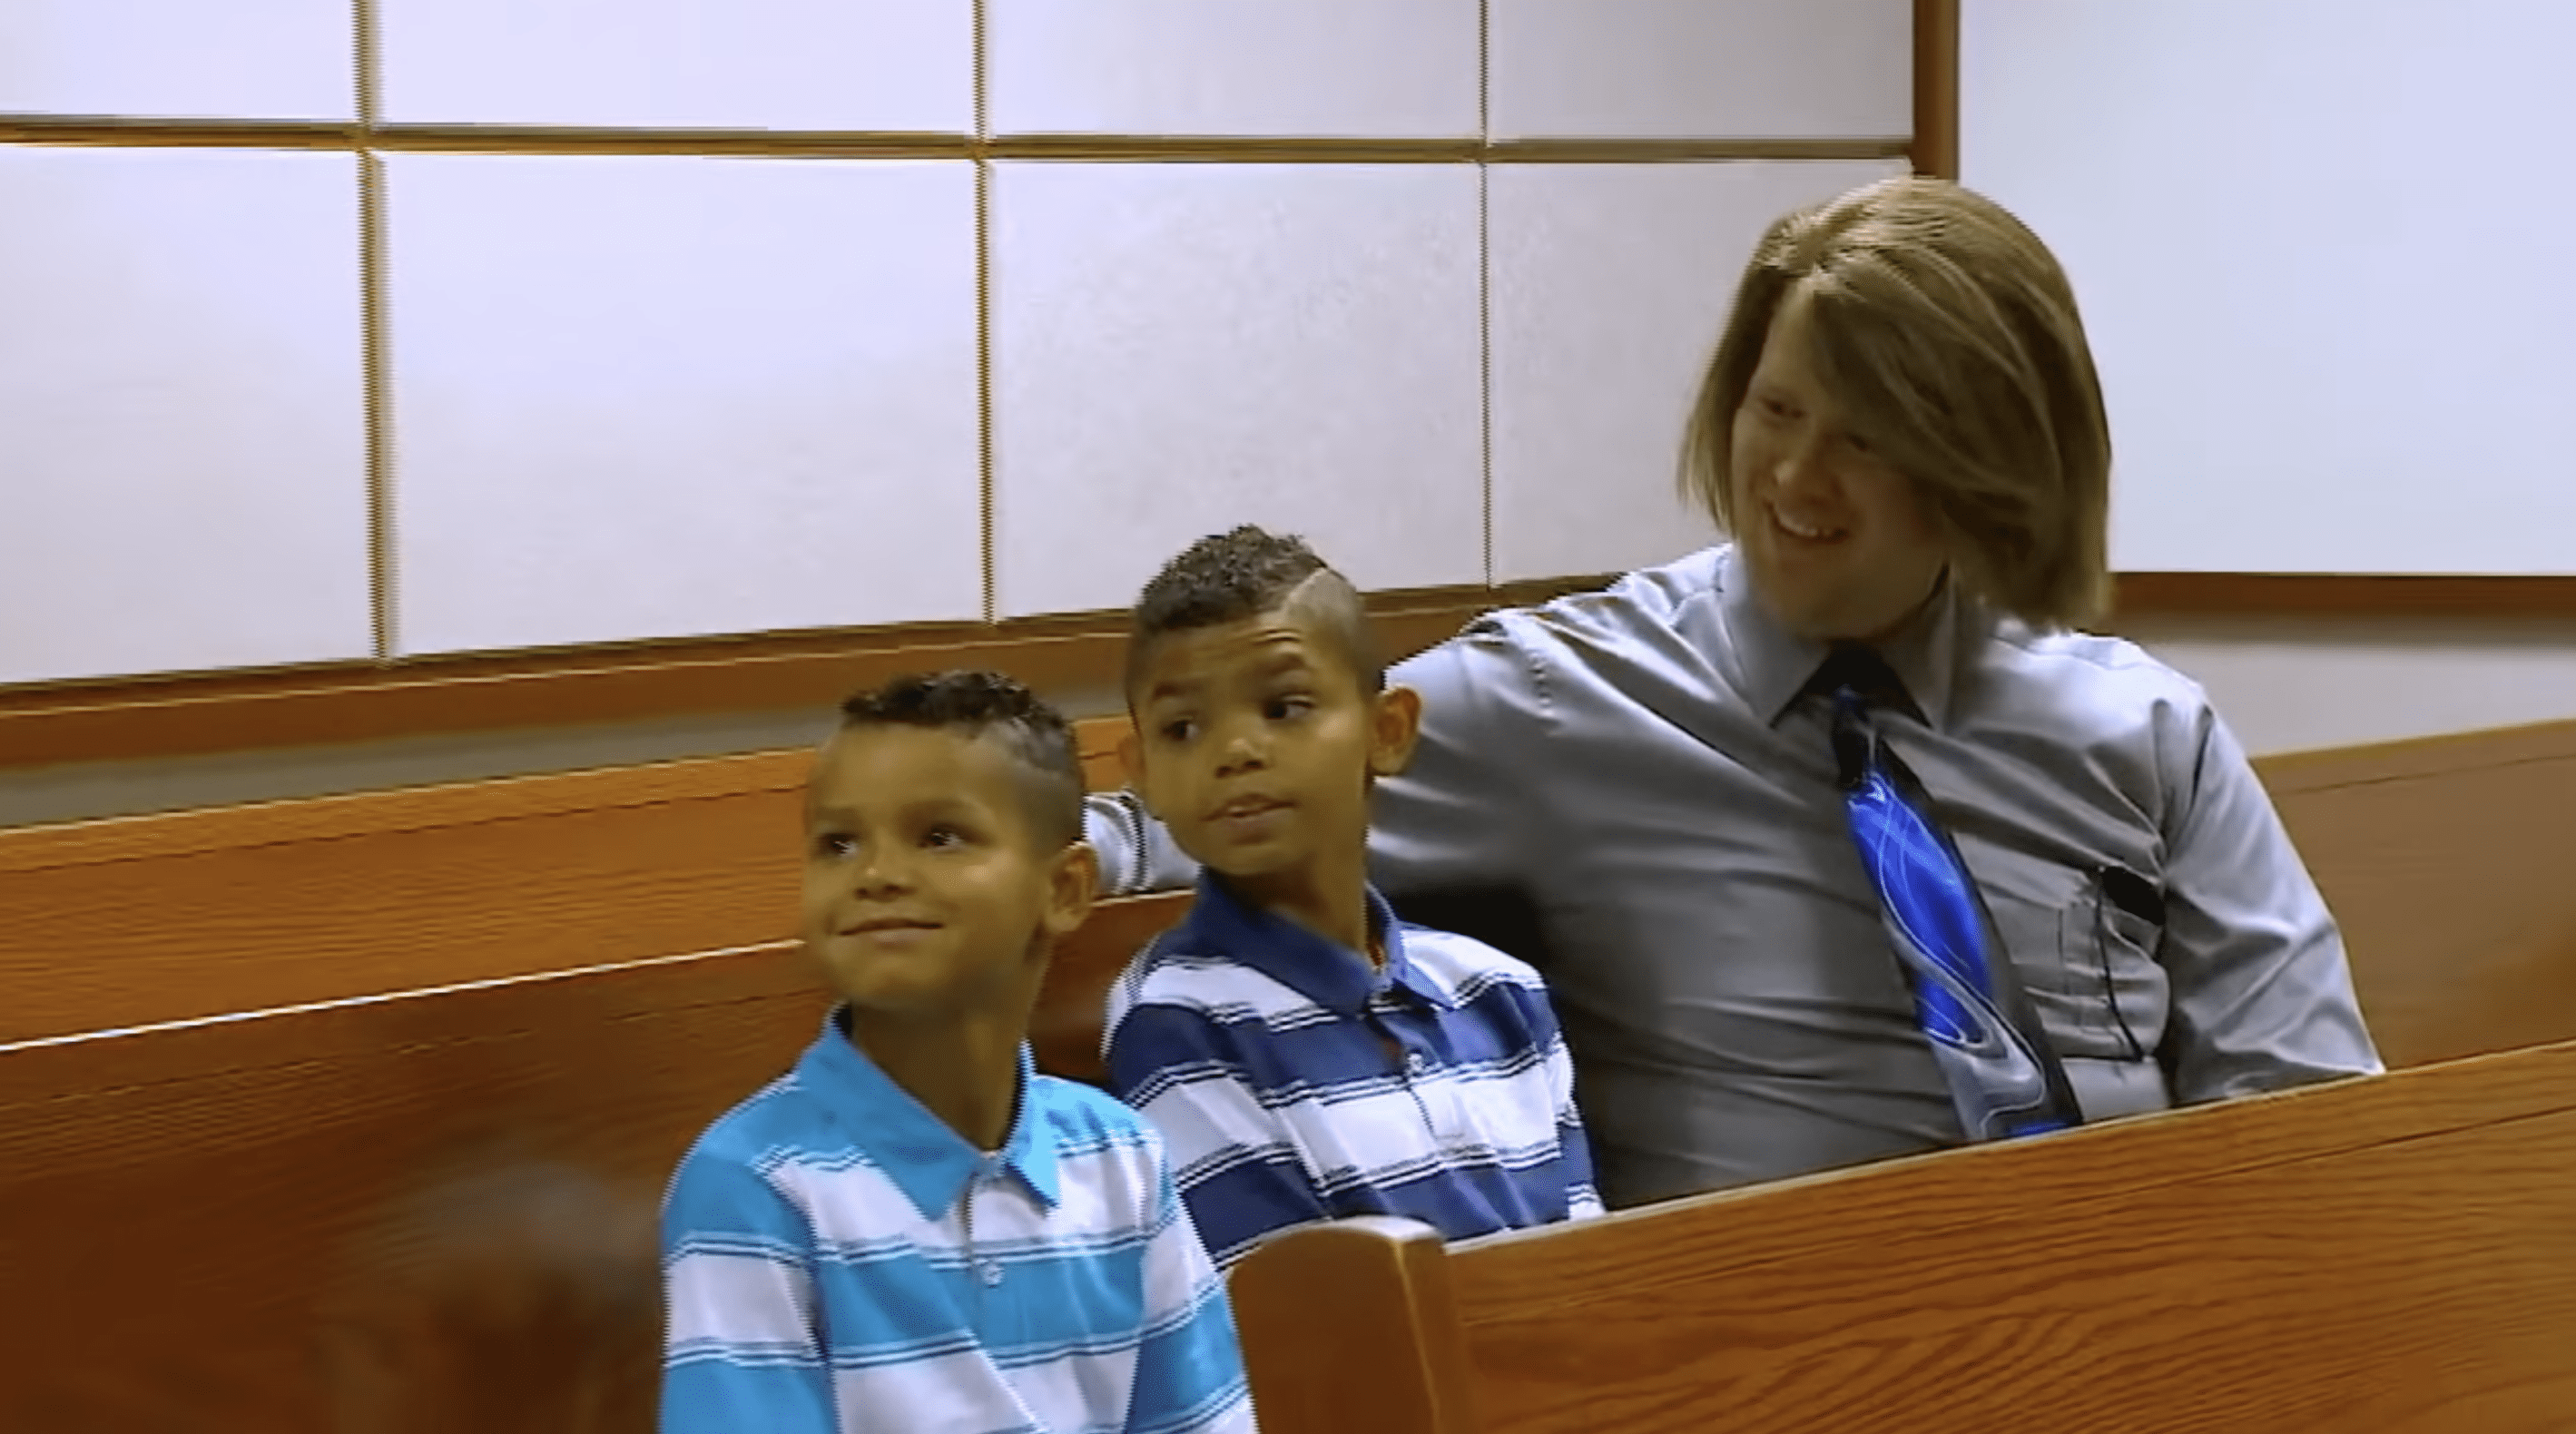 Ke'Lynn y Tre en la sala del tribunal con su padre adoptivo, el Dr. Robert Beck. | Foto: YouTube.com/WFAA